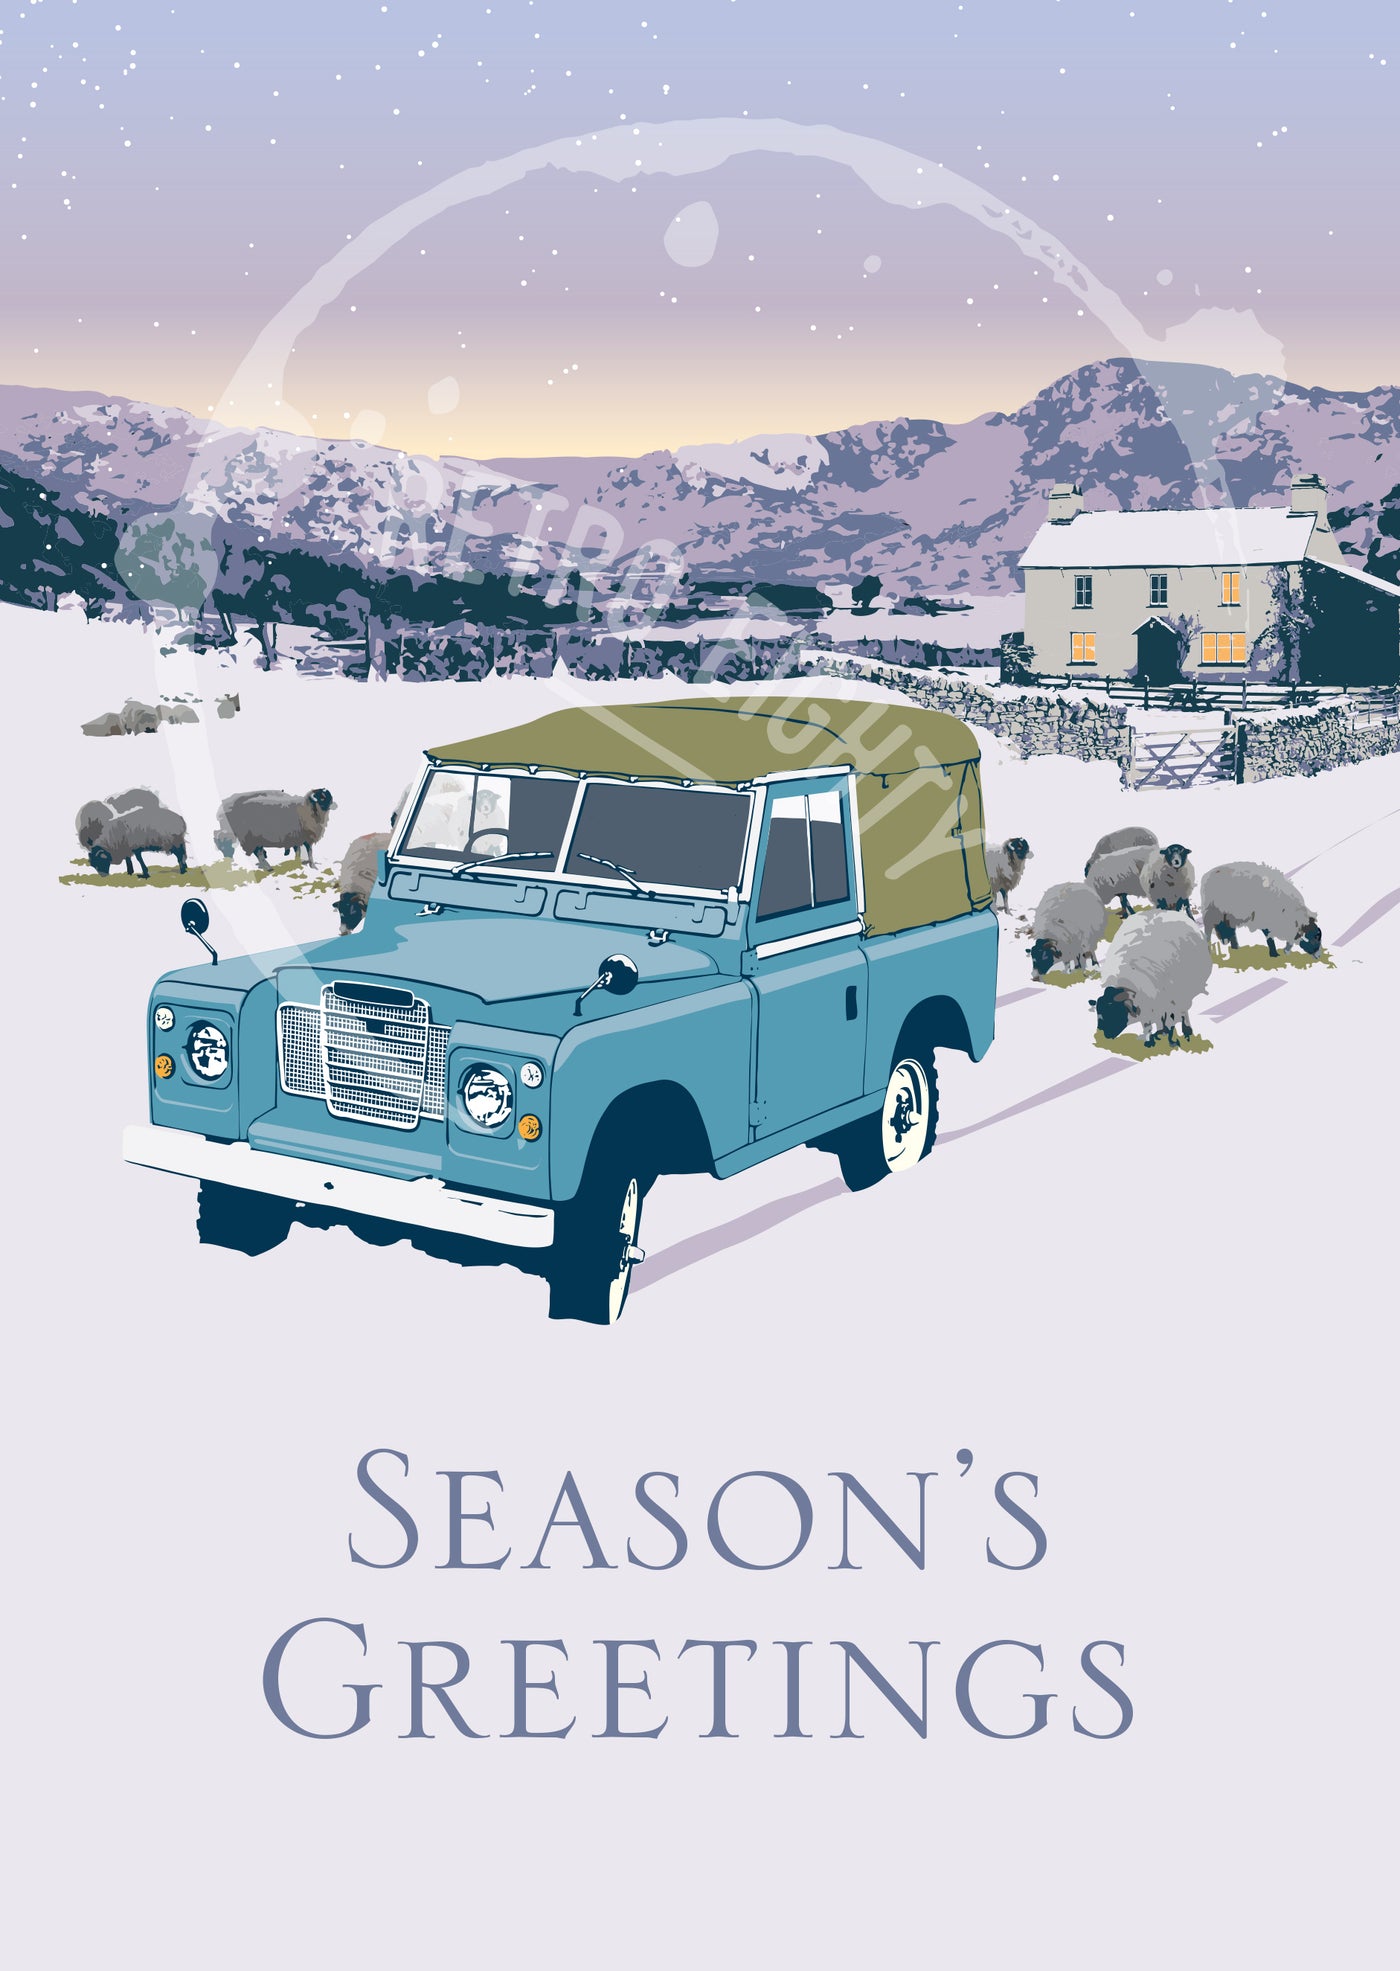 Series 3 Winter Wonderland - A5 Christmas cards